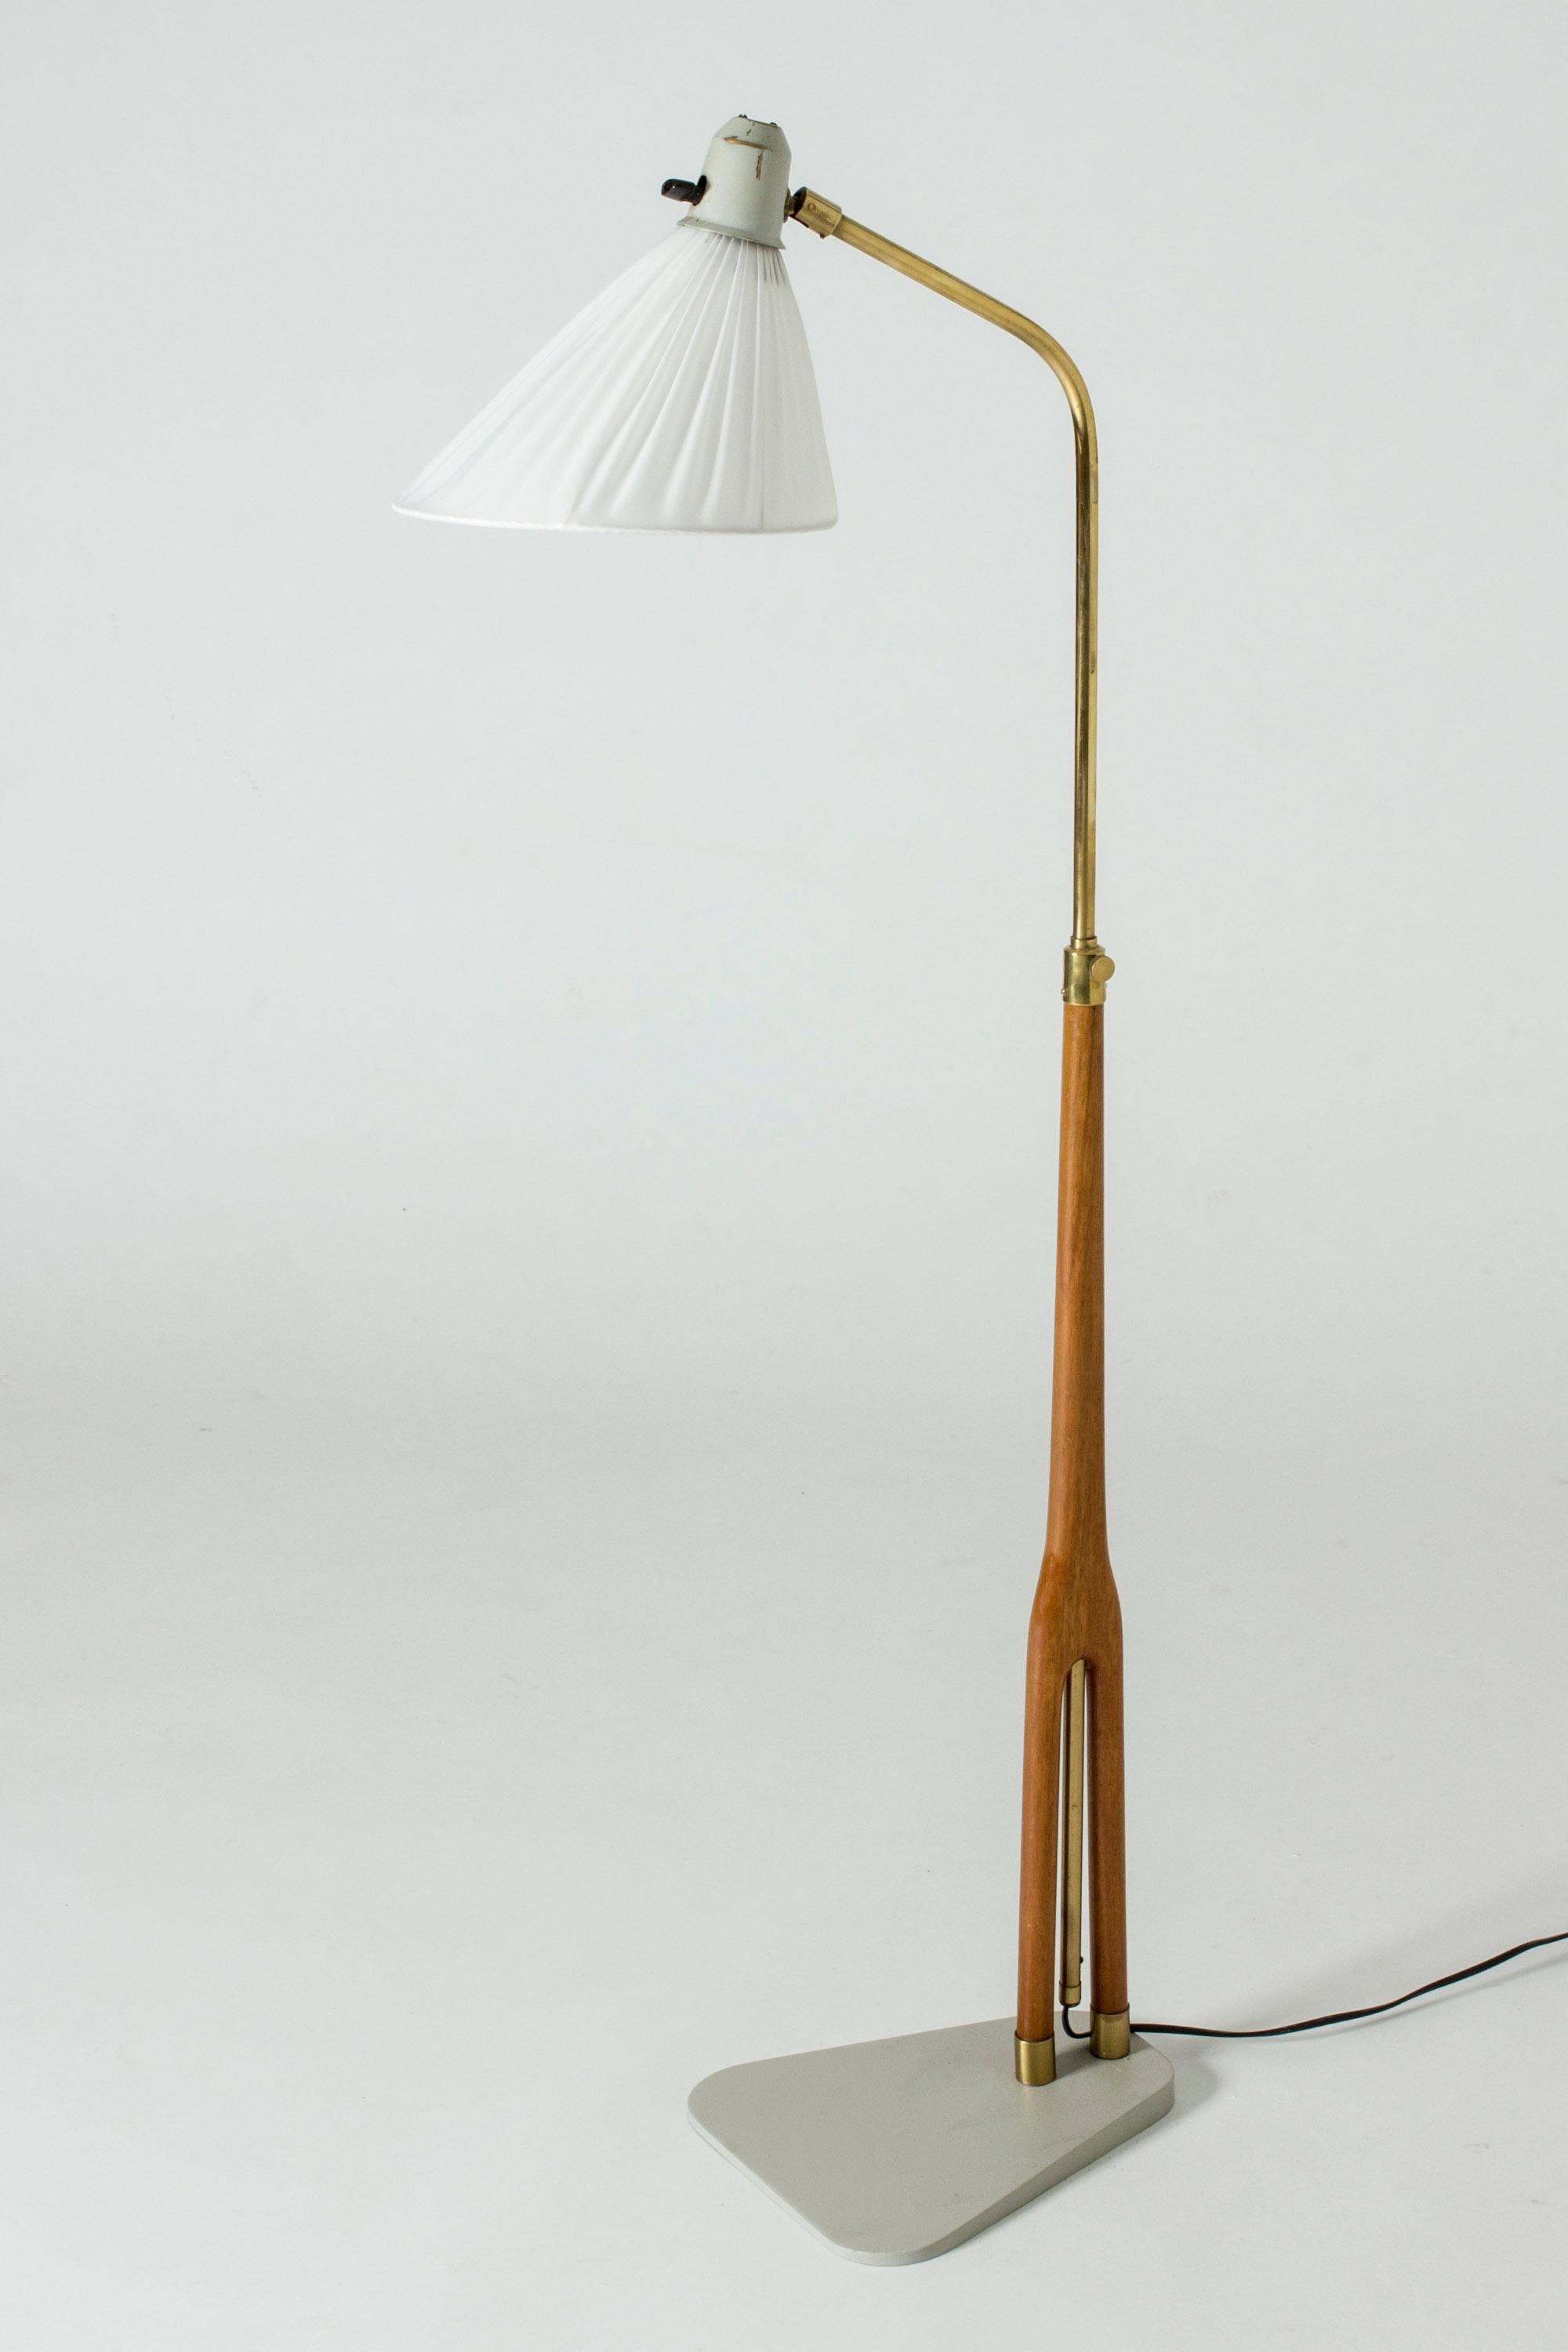 Scandinavian Modern Wood and Brass Floor Lamp from Asea, Sweden